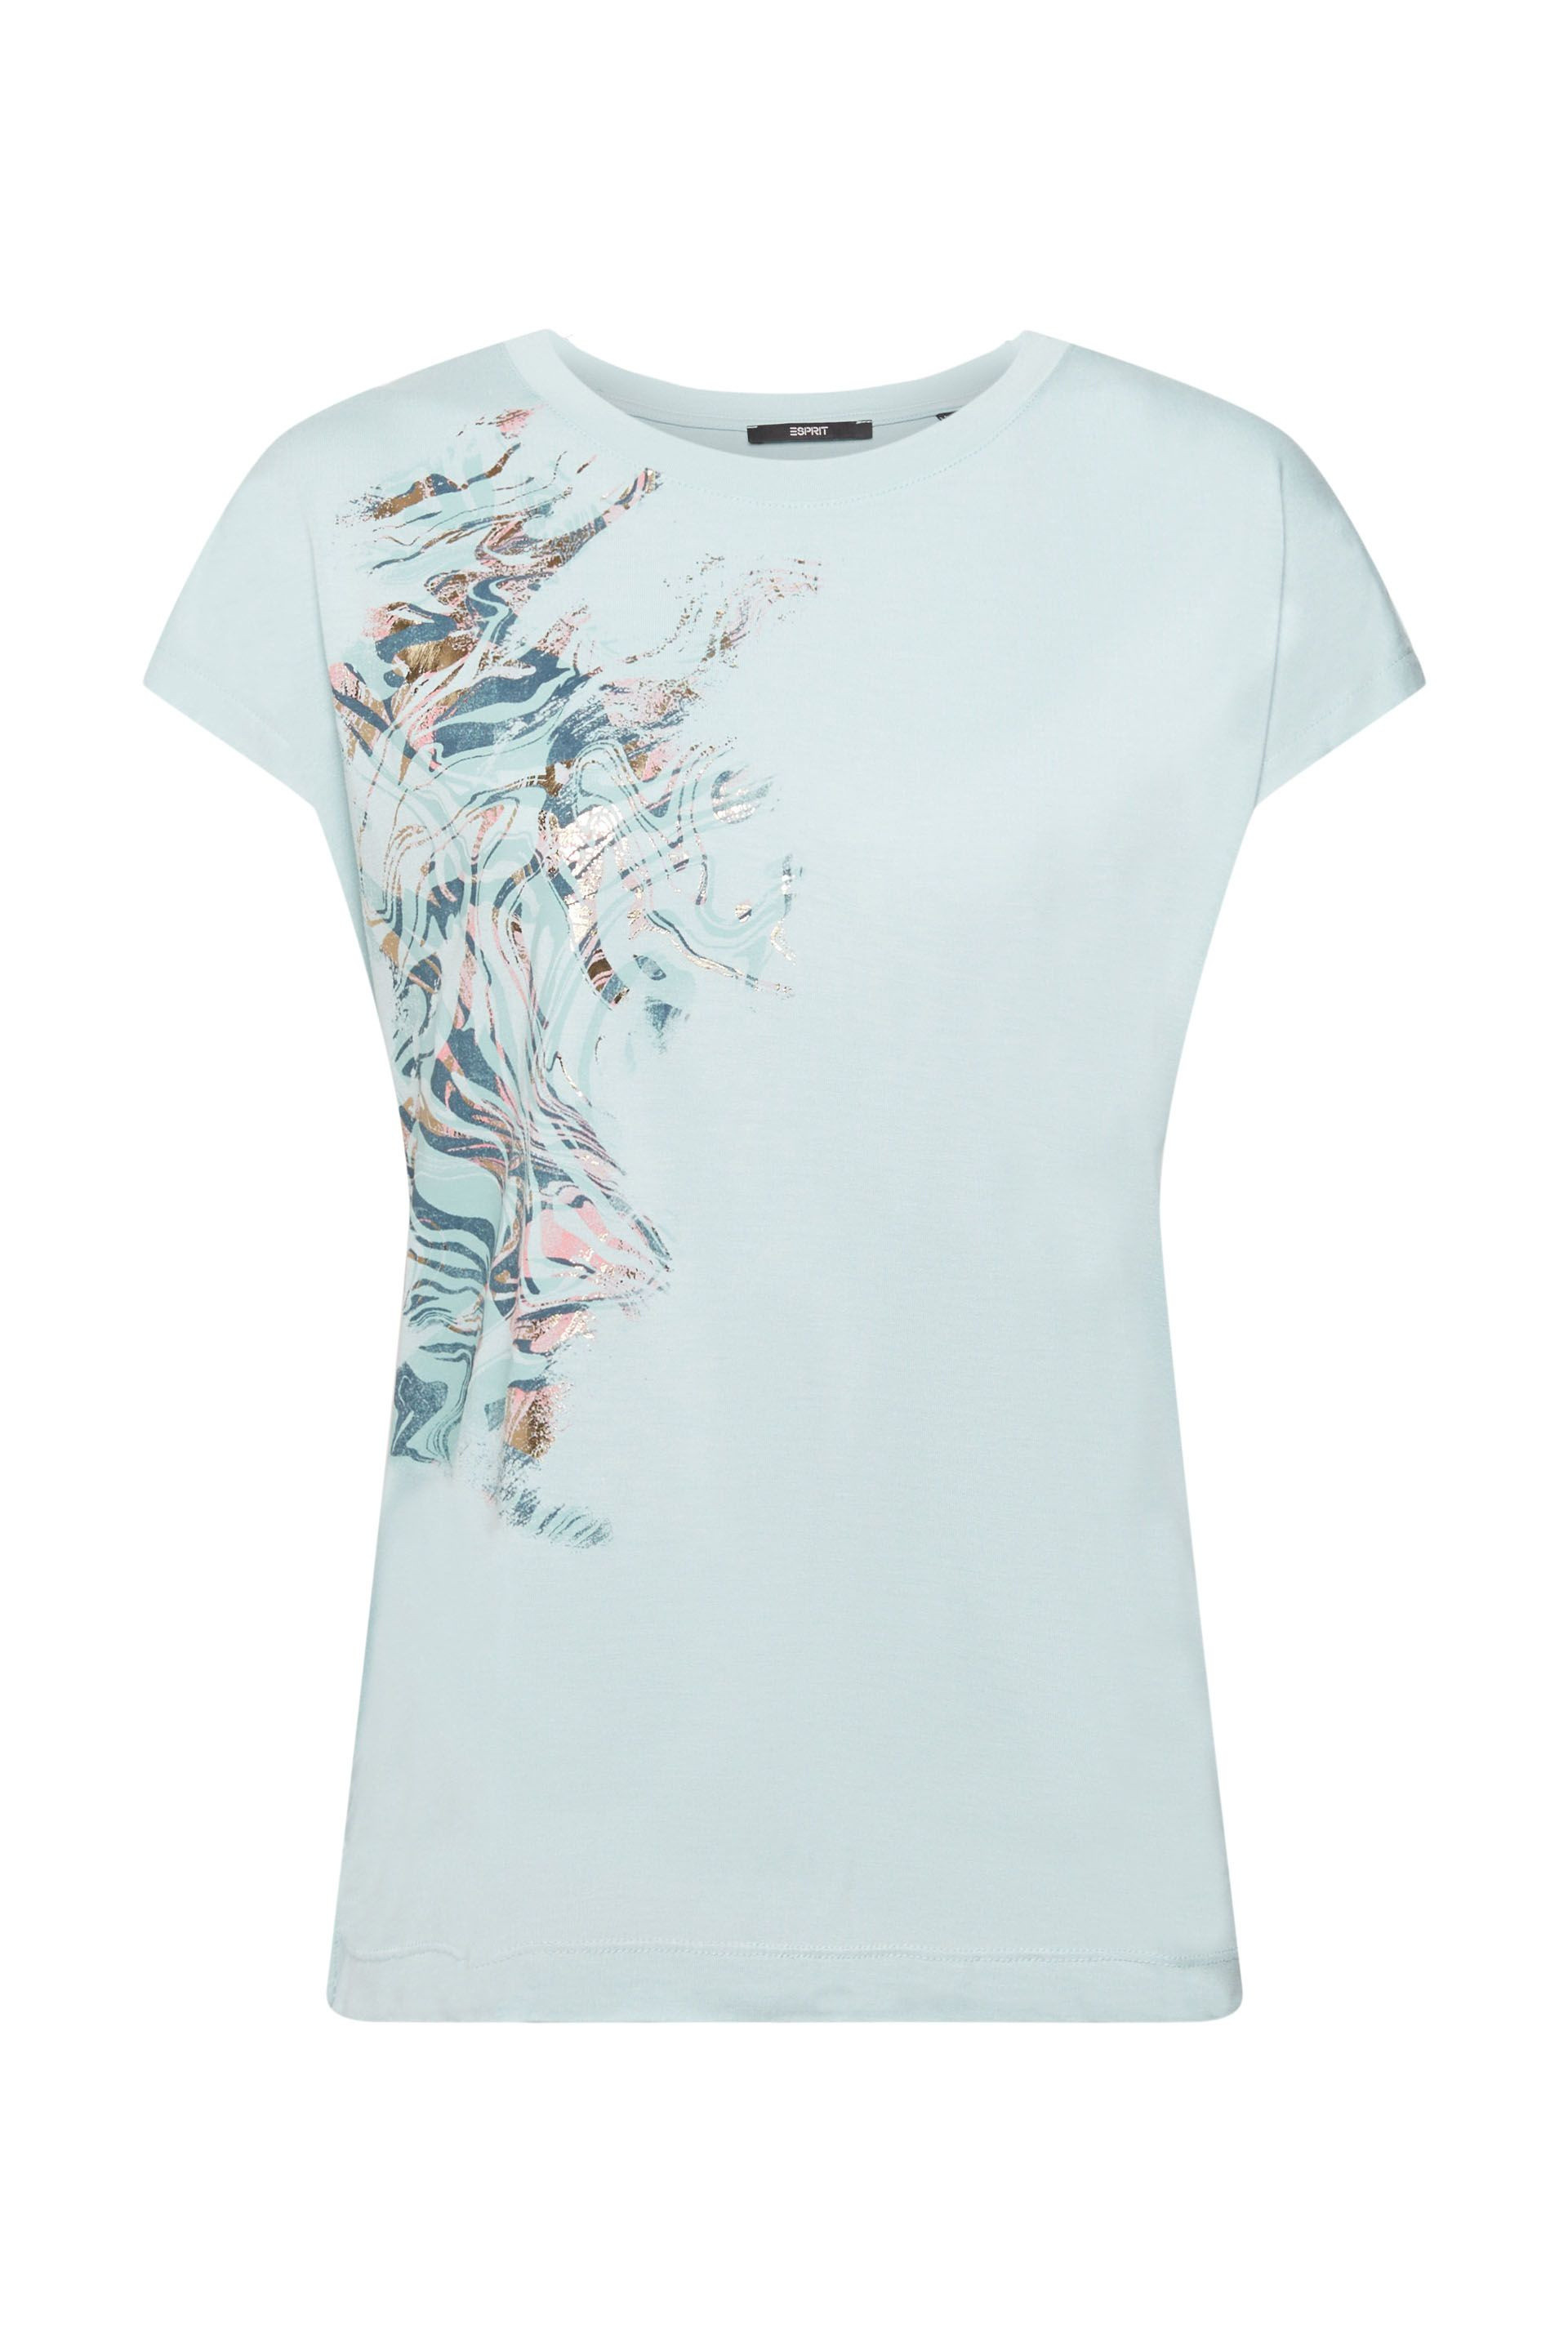 Esprit - T-shirt with sequin lettering, Light Blue, large image number 0